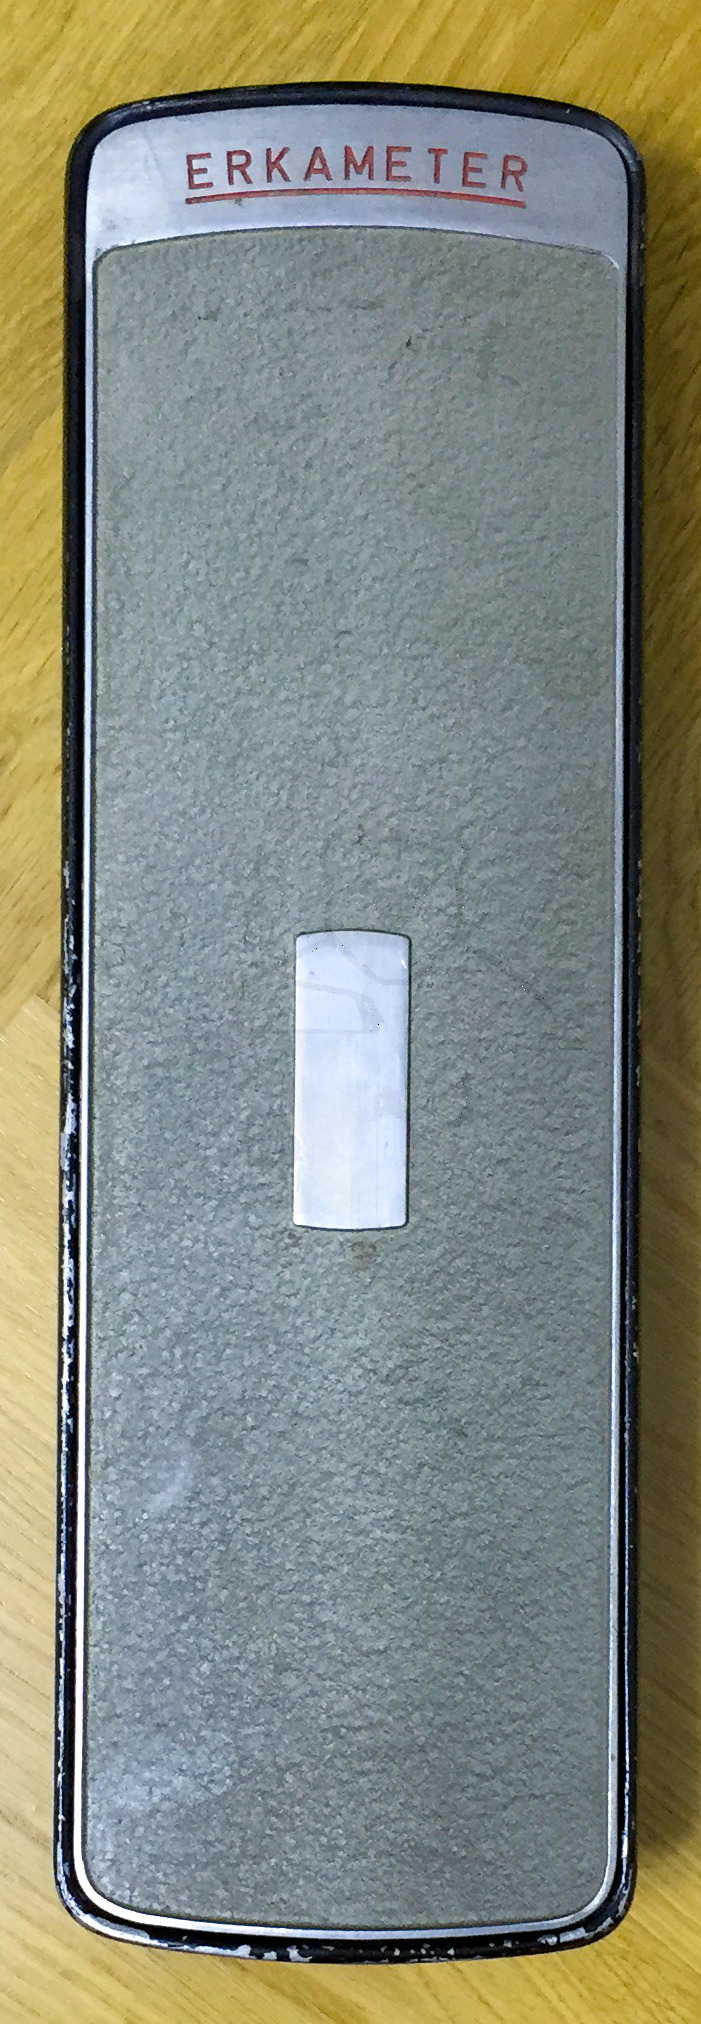 Erka 300 Blutdruckmesser (Sphygmomanometer), Originalzustand, 1960'er Jahre, Geschlossene Box